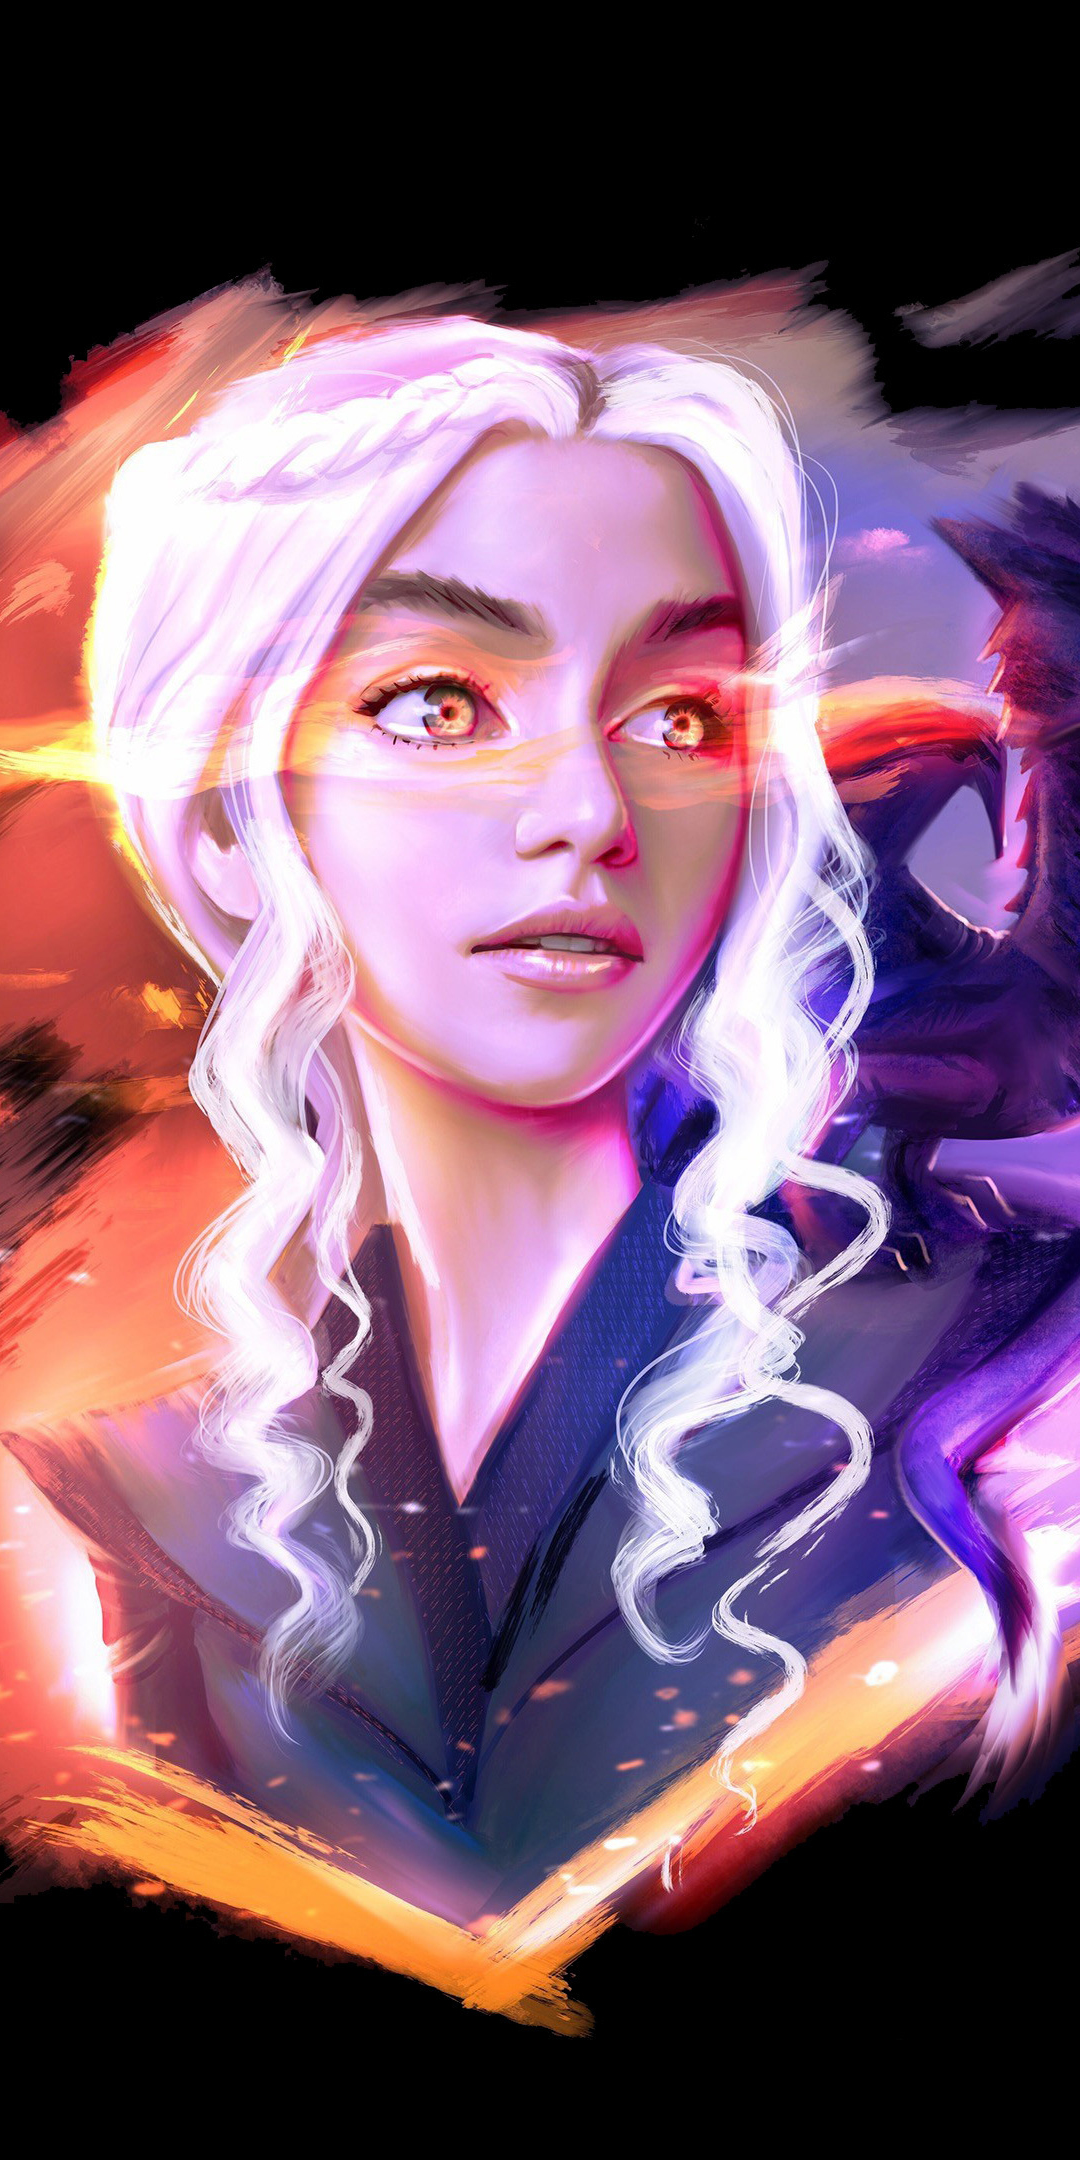 Daenerys Targaryen and dragon, game of thrones, fan art, 1080x2160 wallpaper